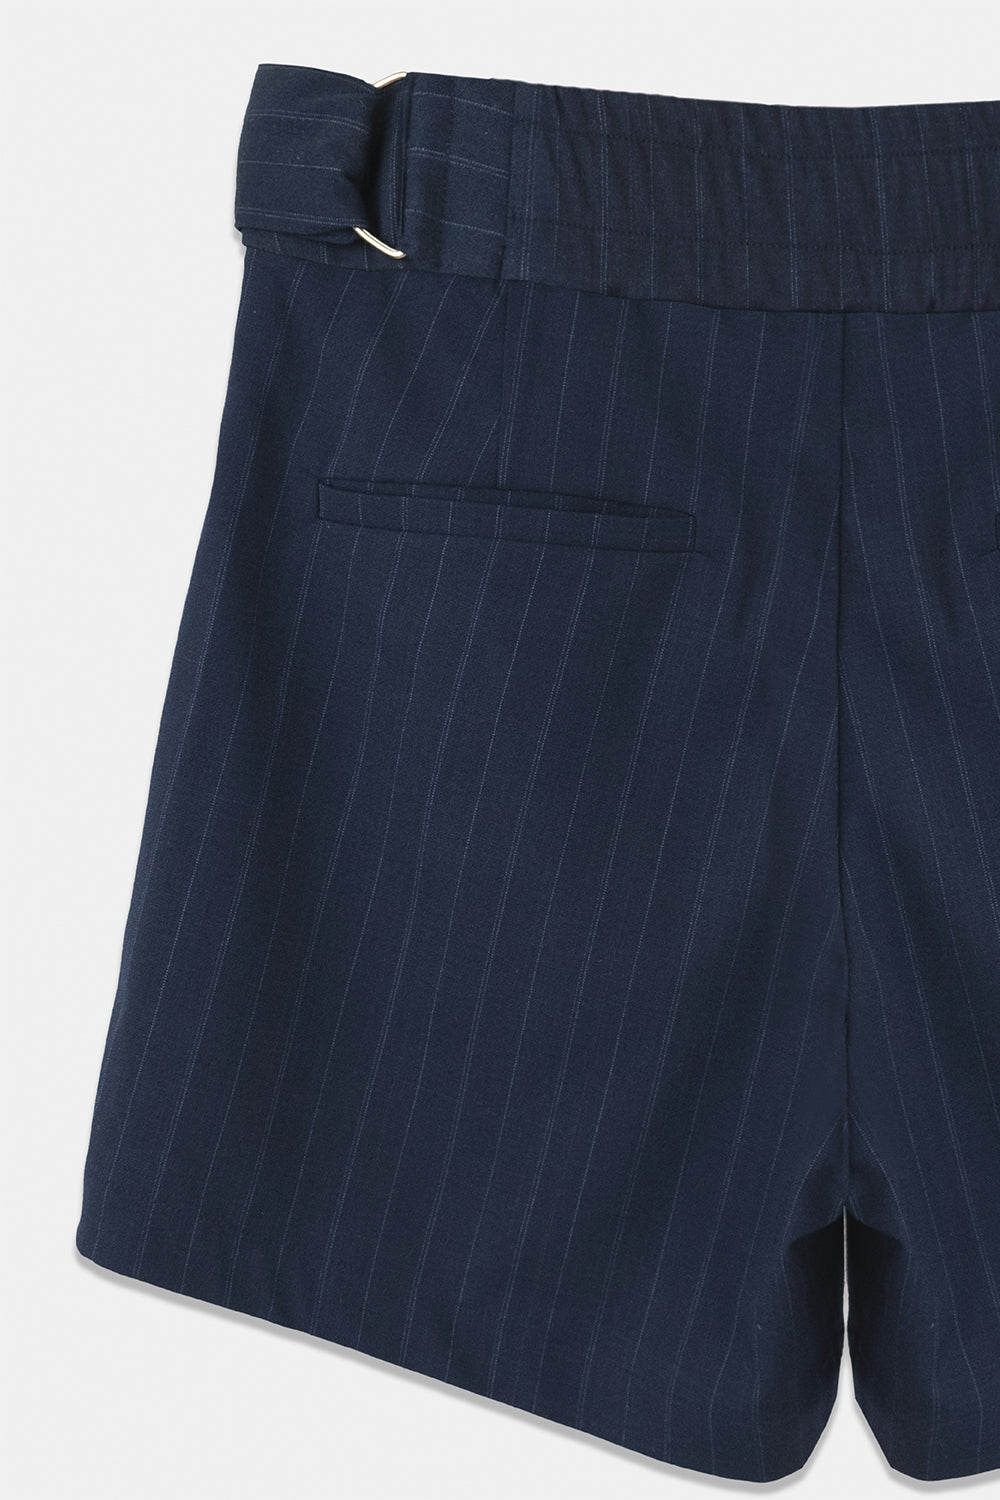 SEANNUNG - MEN - Belted Shorts 帶環短褲